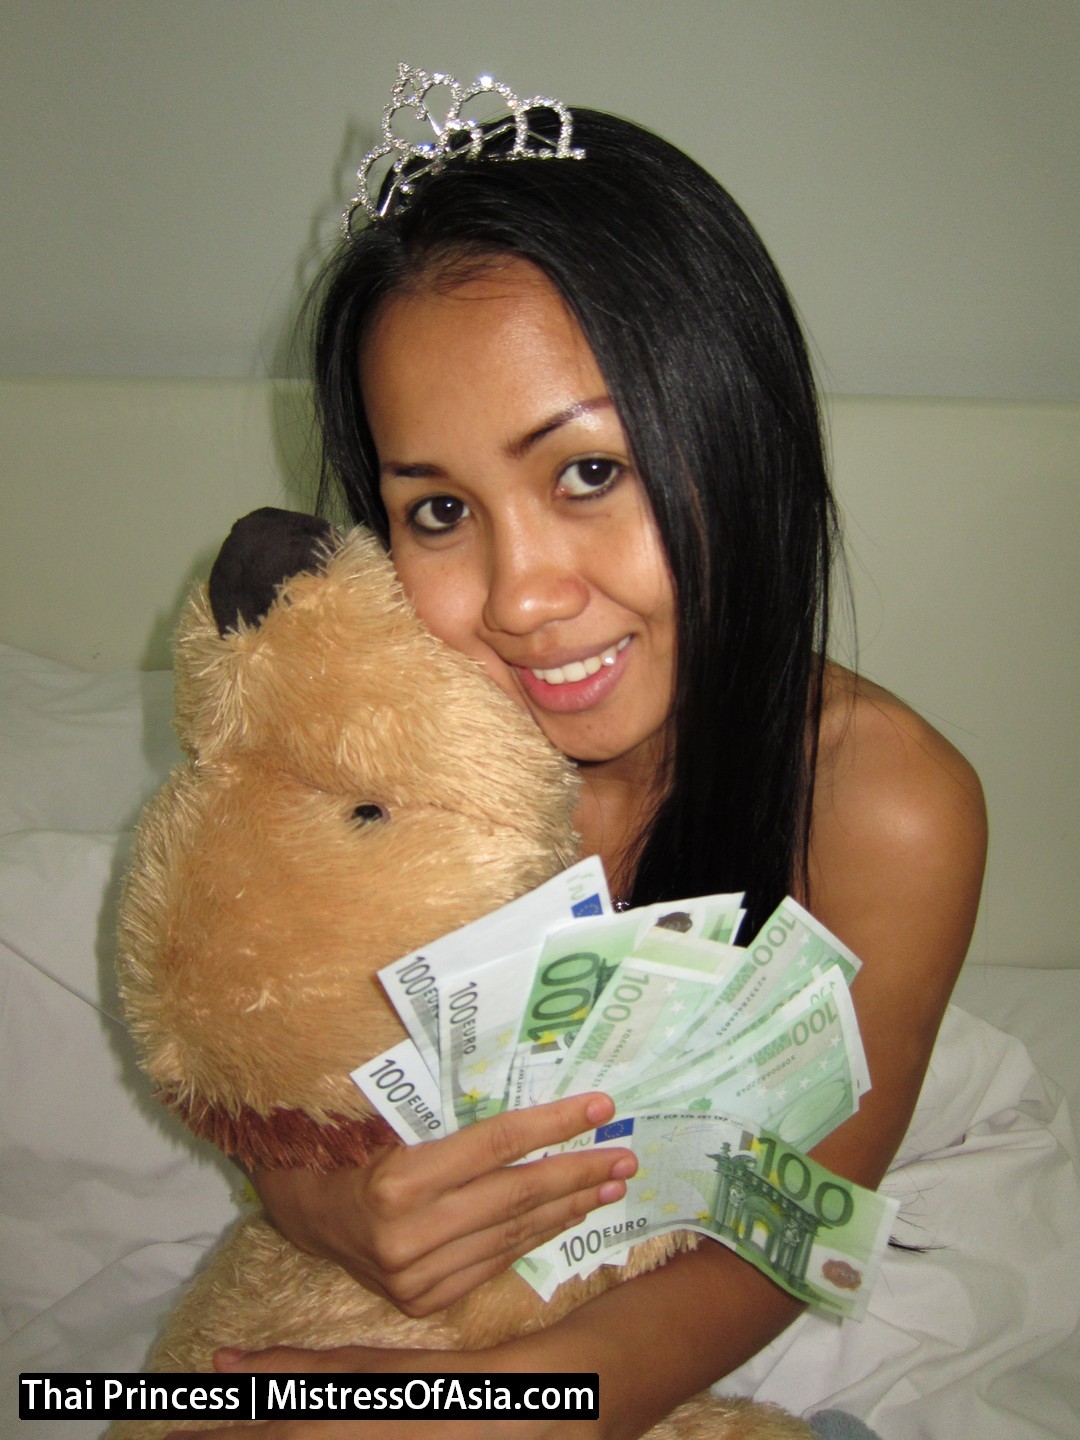 Principessa tailandese domina uomini deboli per denaro
 #69766398